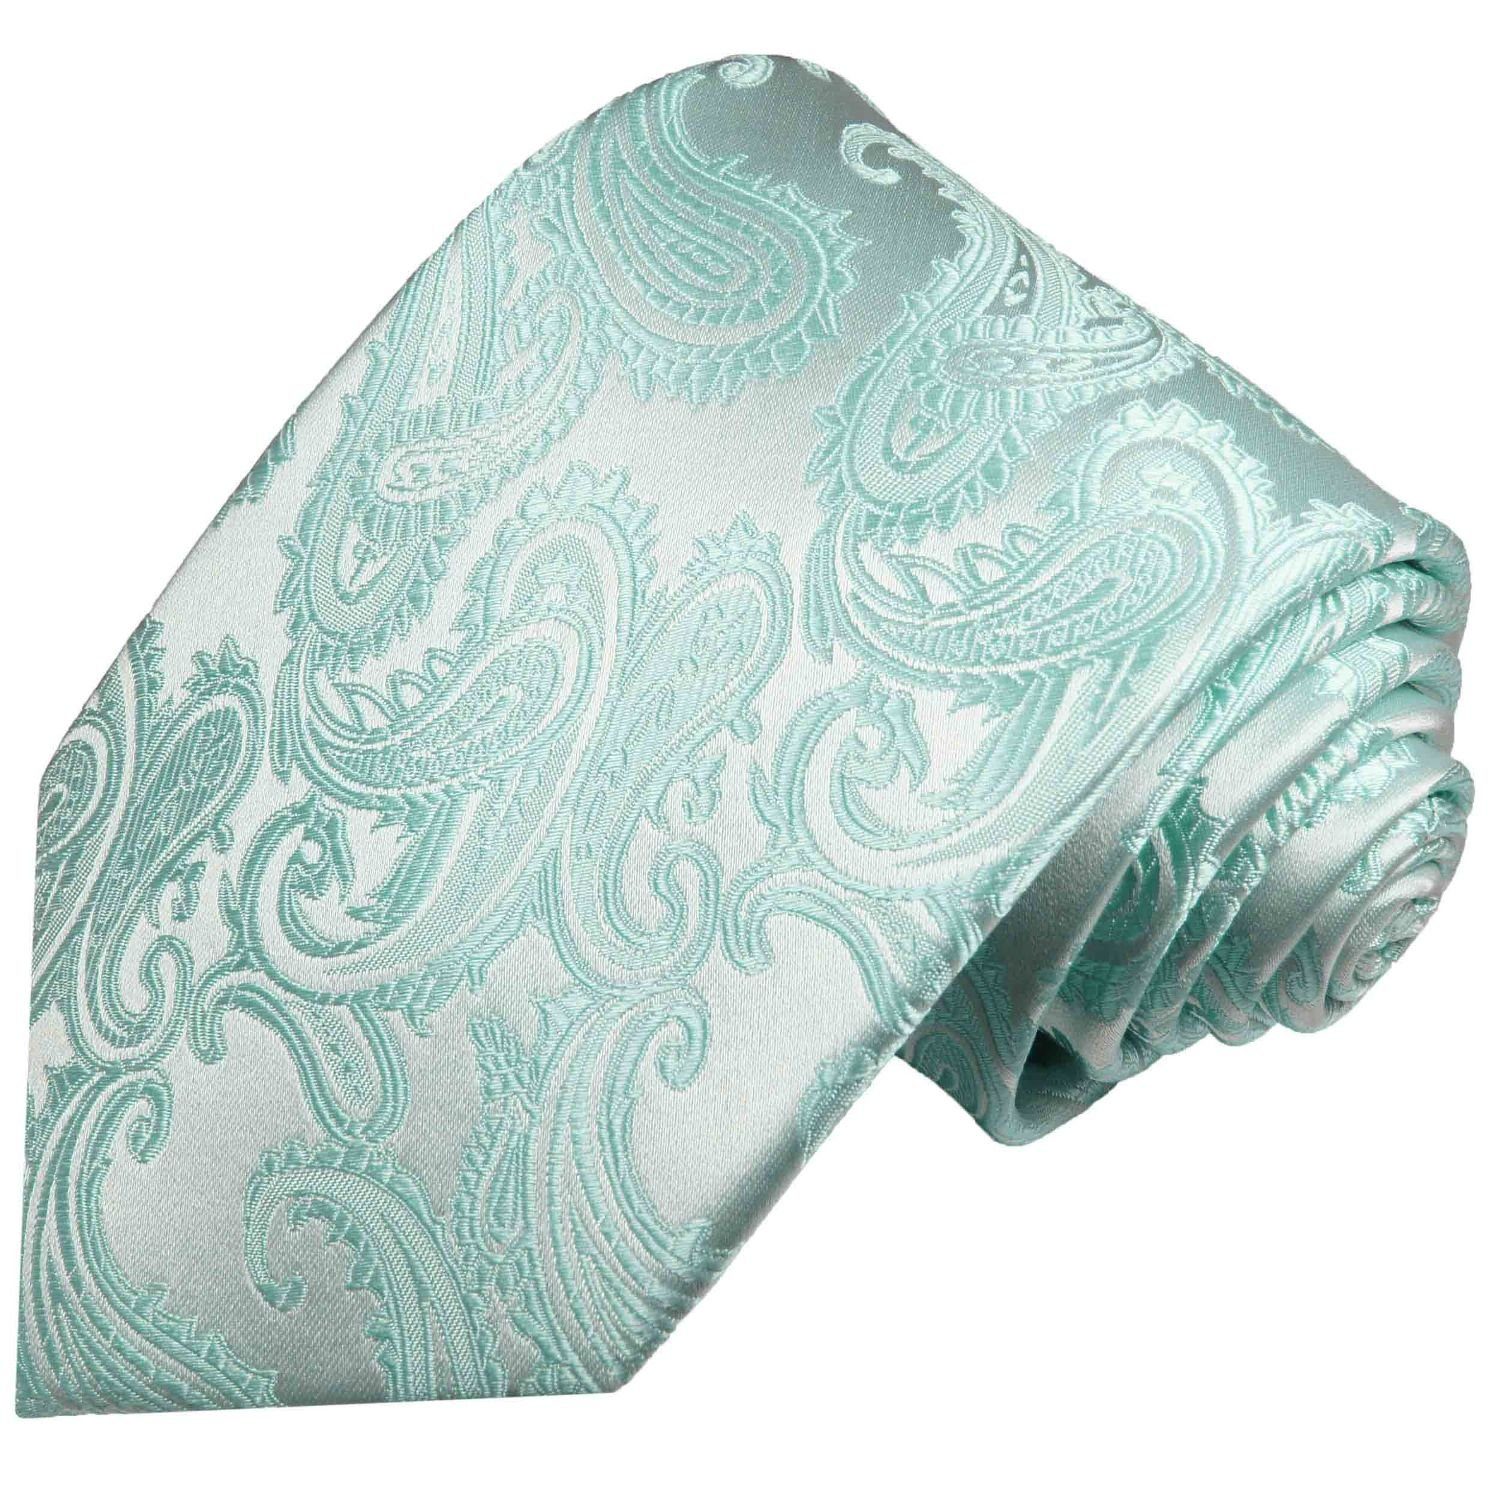 Paul Malone Krawatte Elegante Seidenkrawatte Herren Schlips paisley brokat 100% Seide Breit (8cm), hell türkis 989